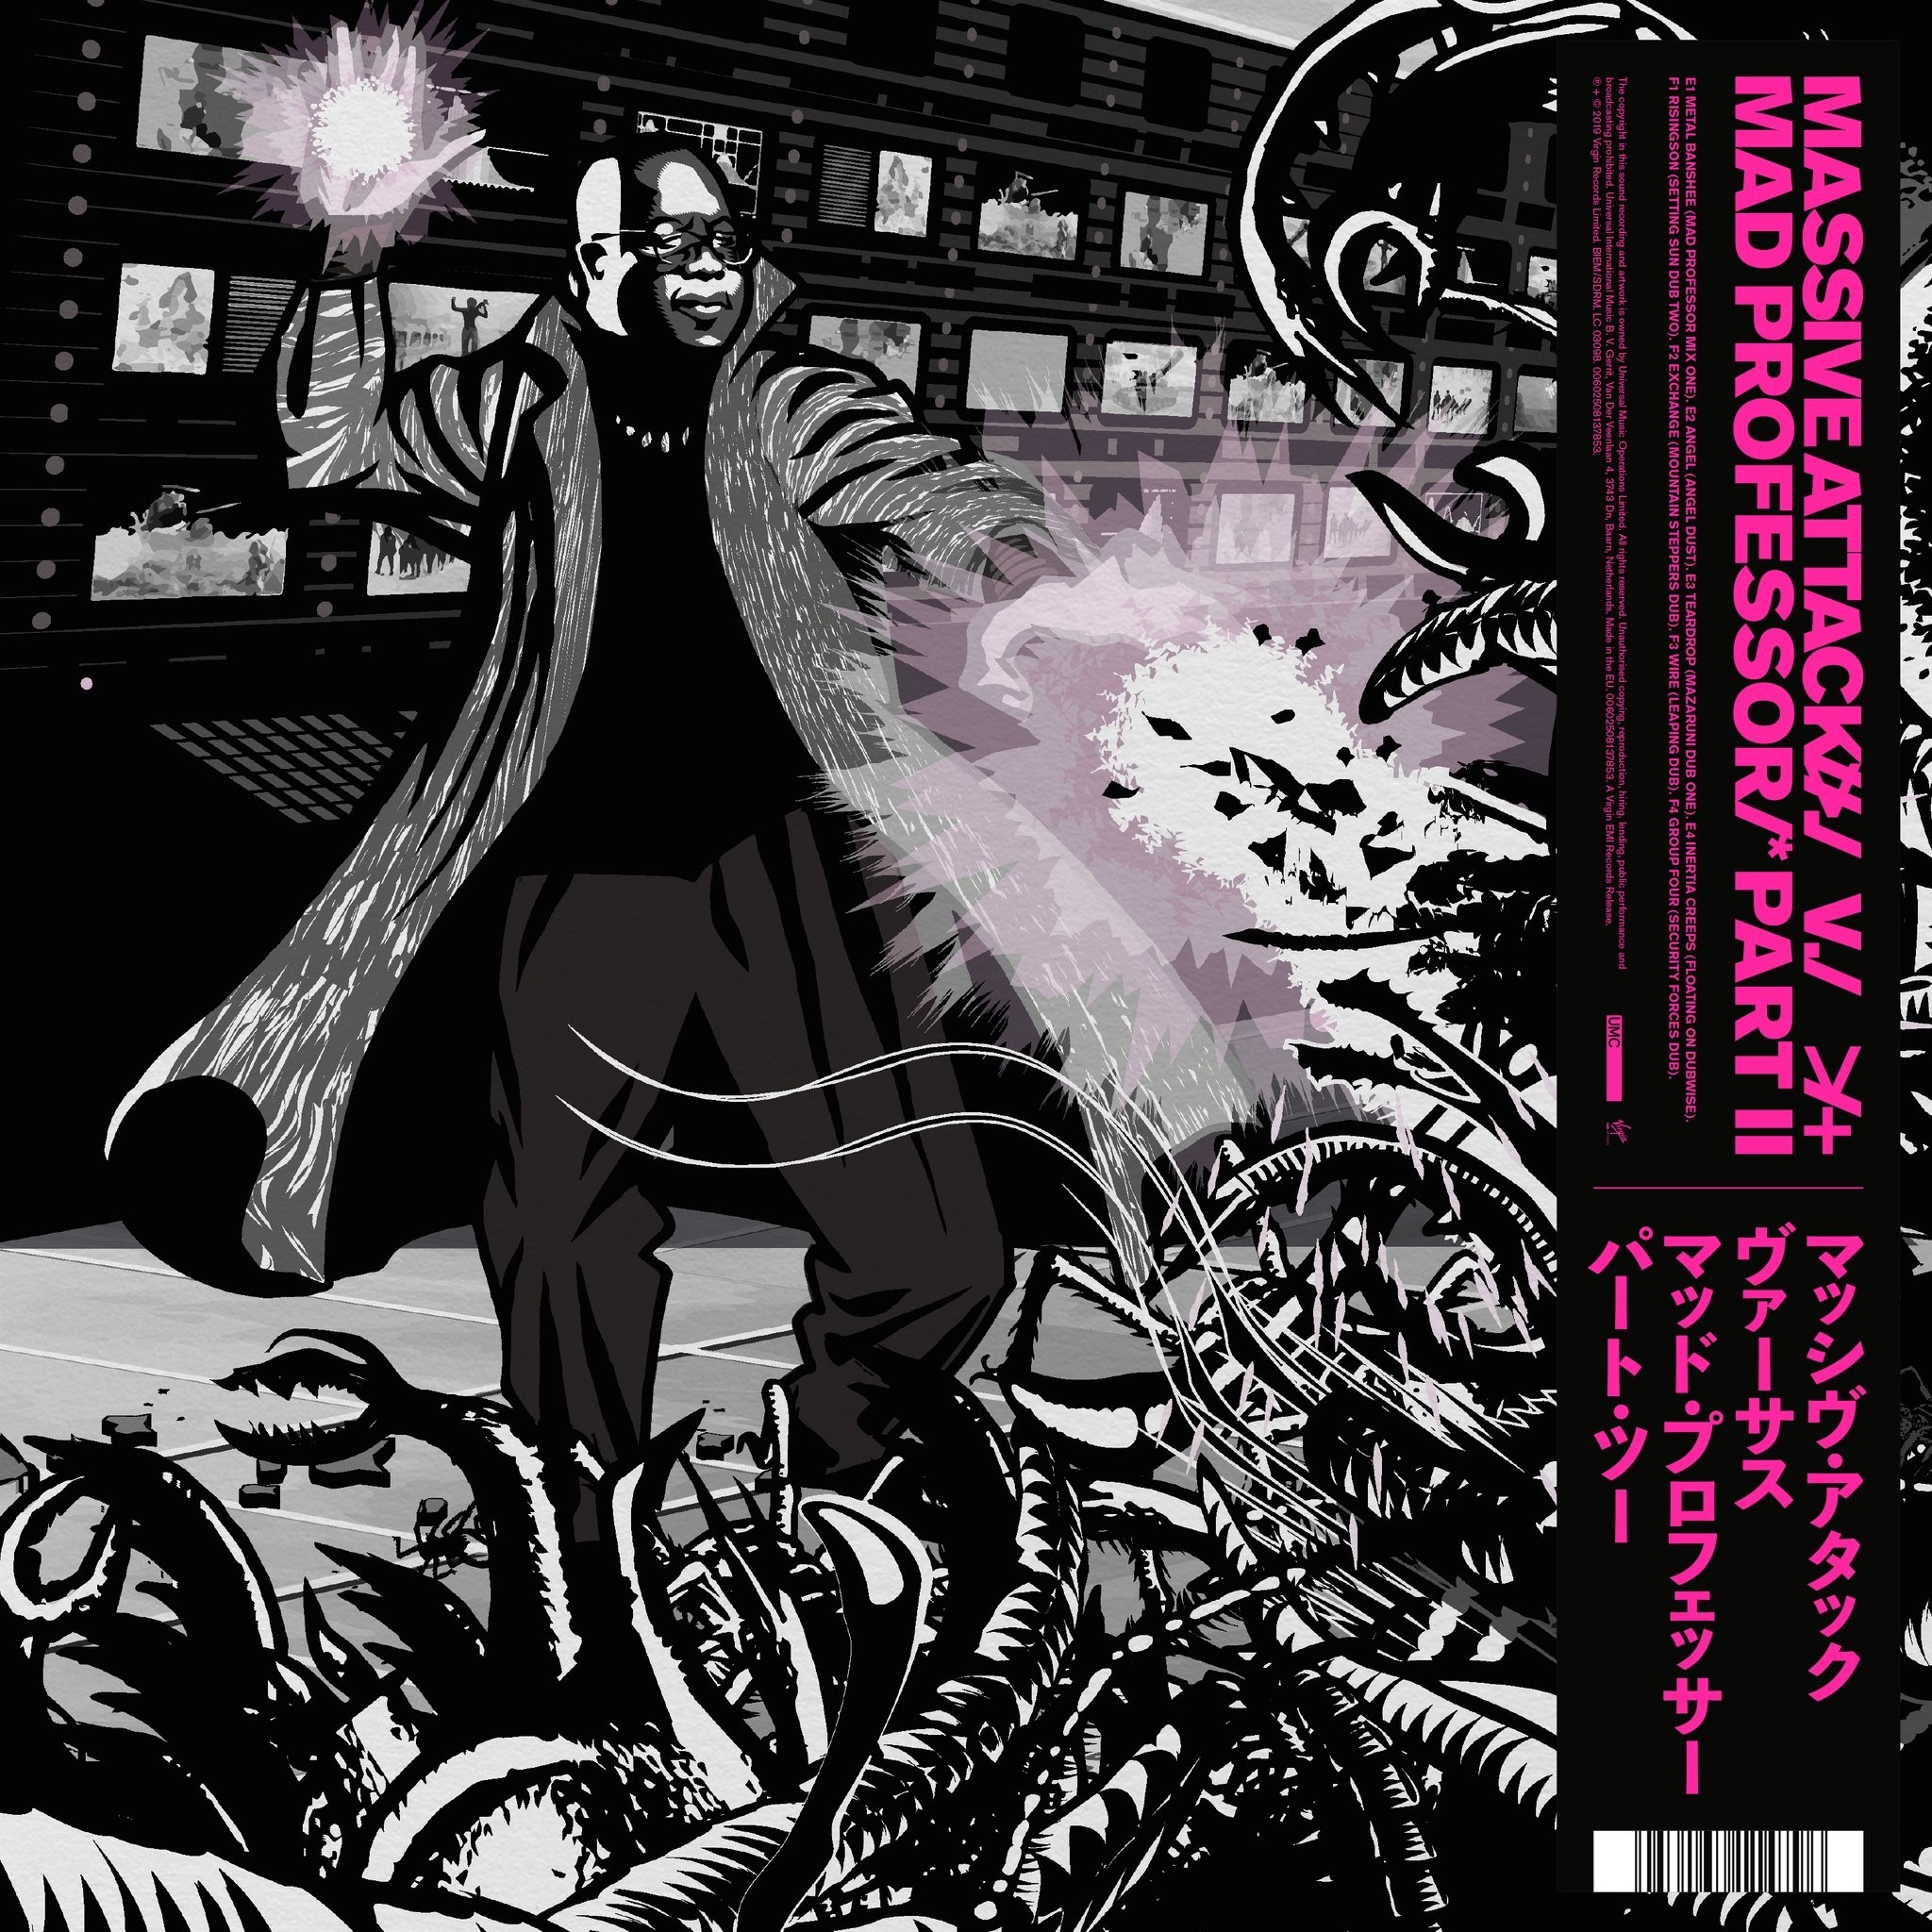 Massive Attack v Mad Professor - Part II Mezzanine Remix Tapes '98 vinyl LP